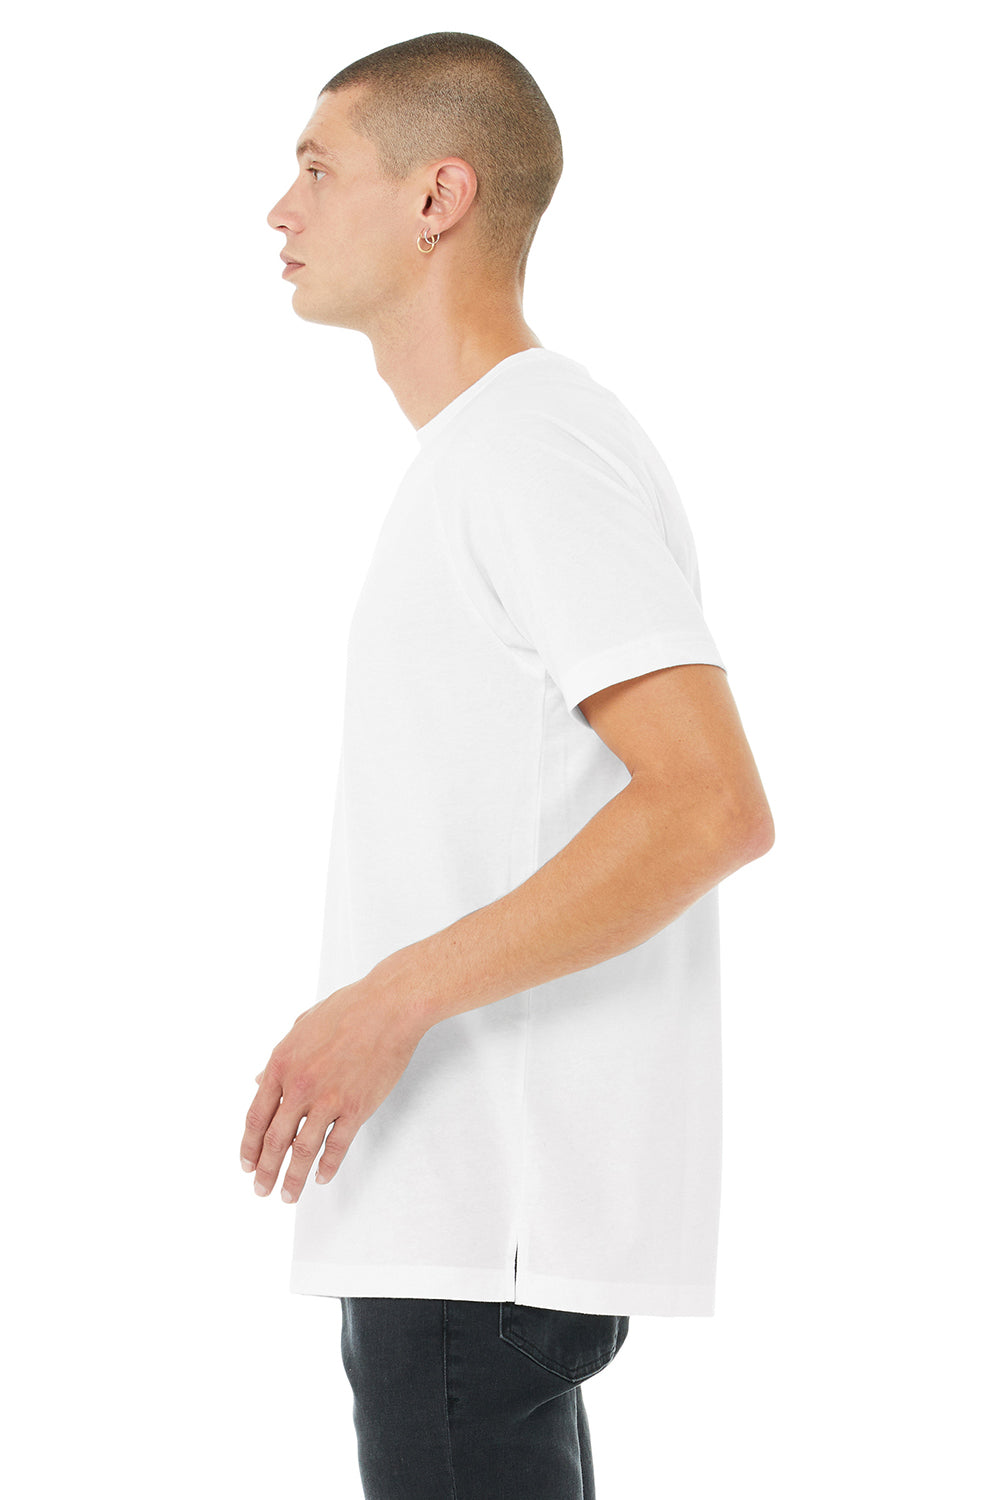 Bella + Canvas 3201 Mens CVC Raglan Short Sleeve Crewneck T-Shirt Solid White Model Side